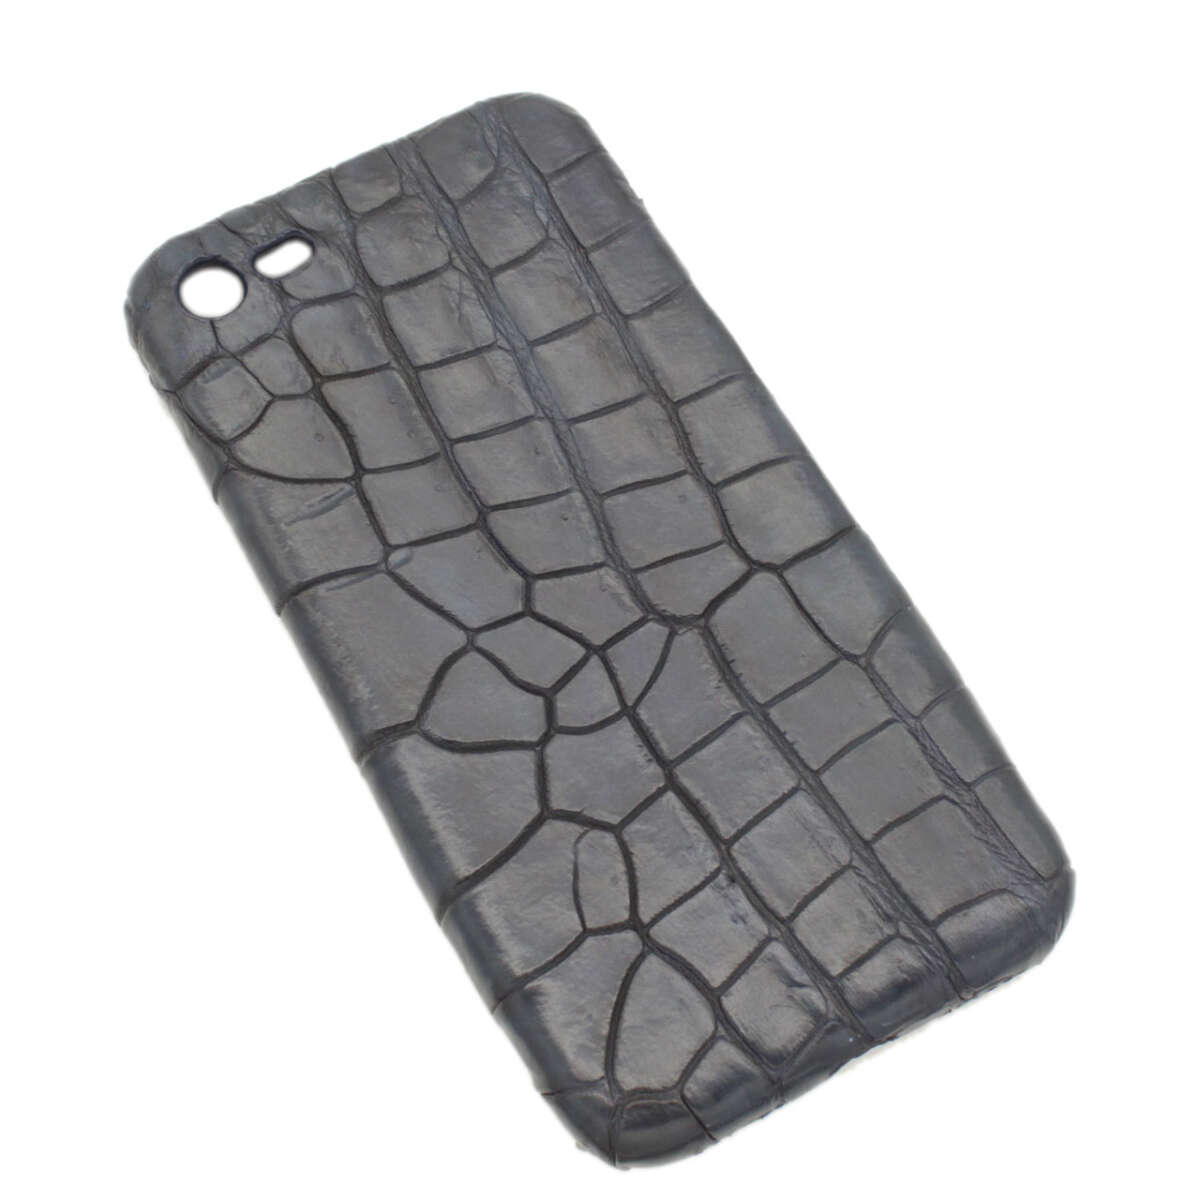 Ốp lưng iPhone 7 da cá sấu S1064a